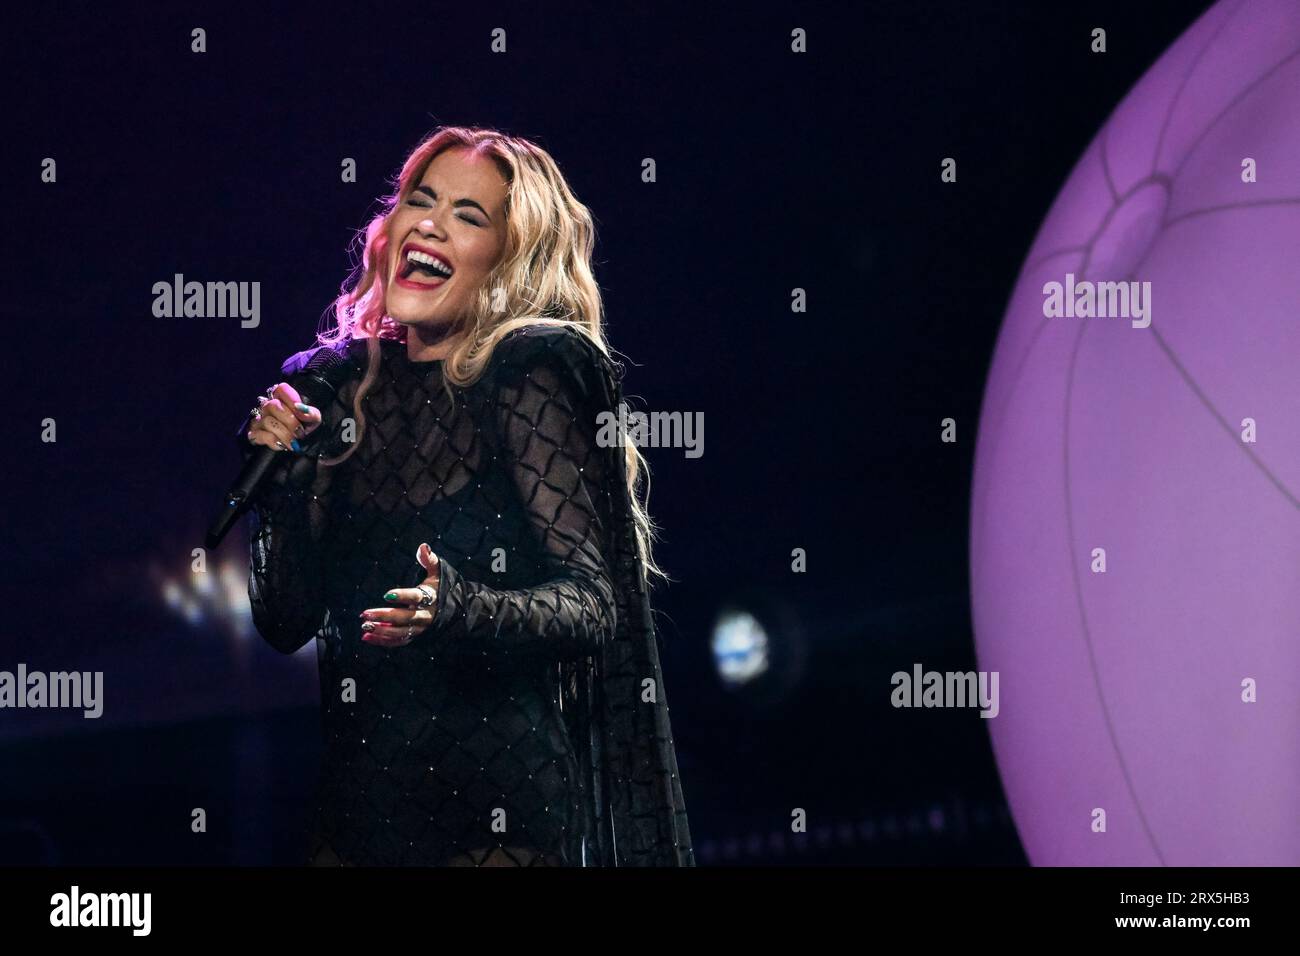 British singer Rita Ora performs on stage singing at the Closing Ceremony, Invictus Games Düsseldorf, Germany Stock Photo